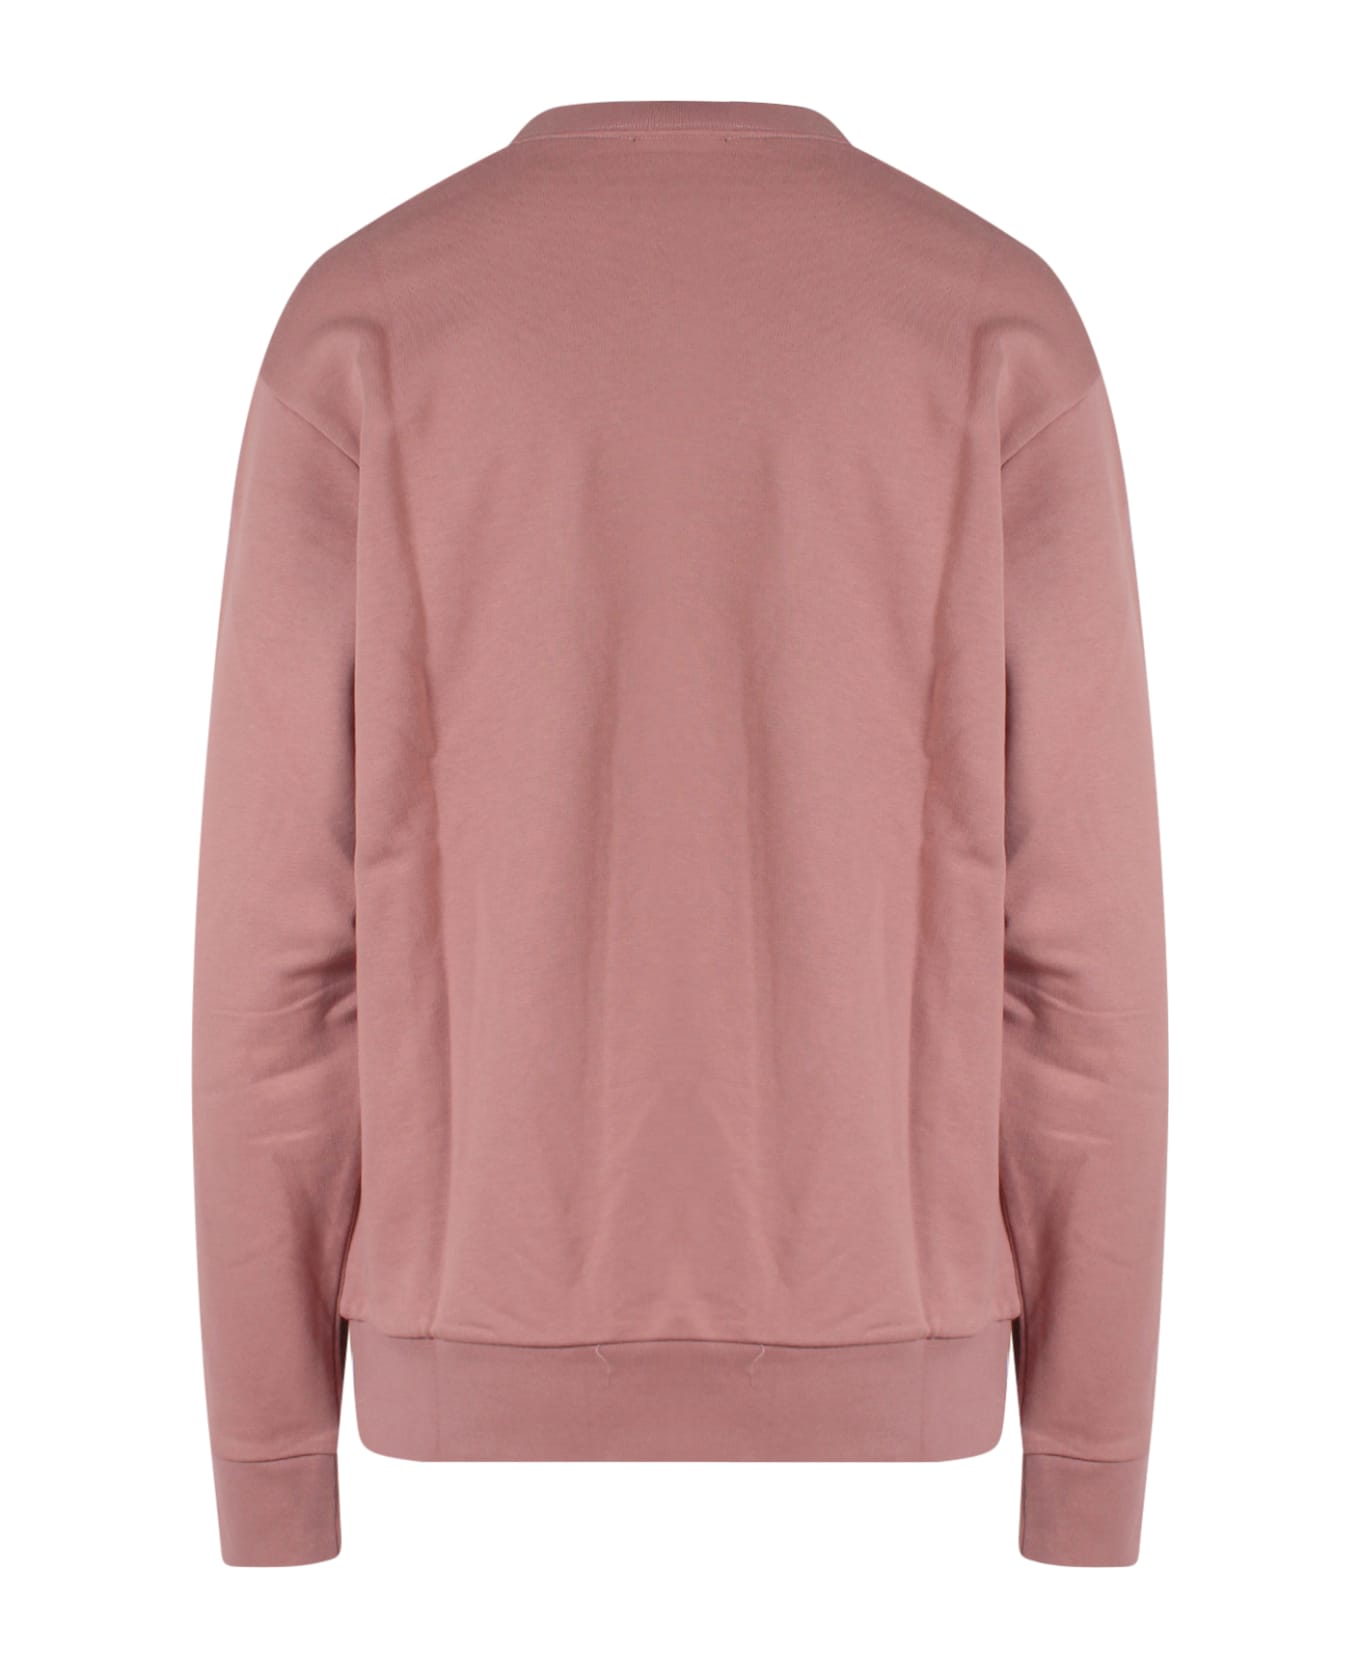 A.P.C. Sweatshirt - Pink フリース